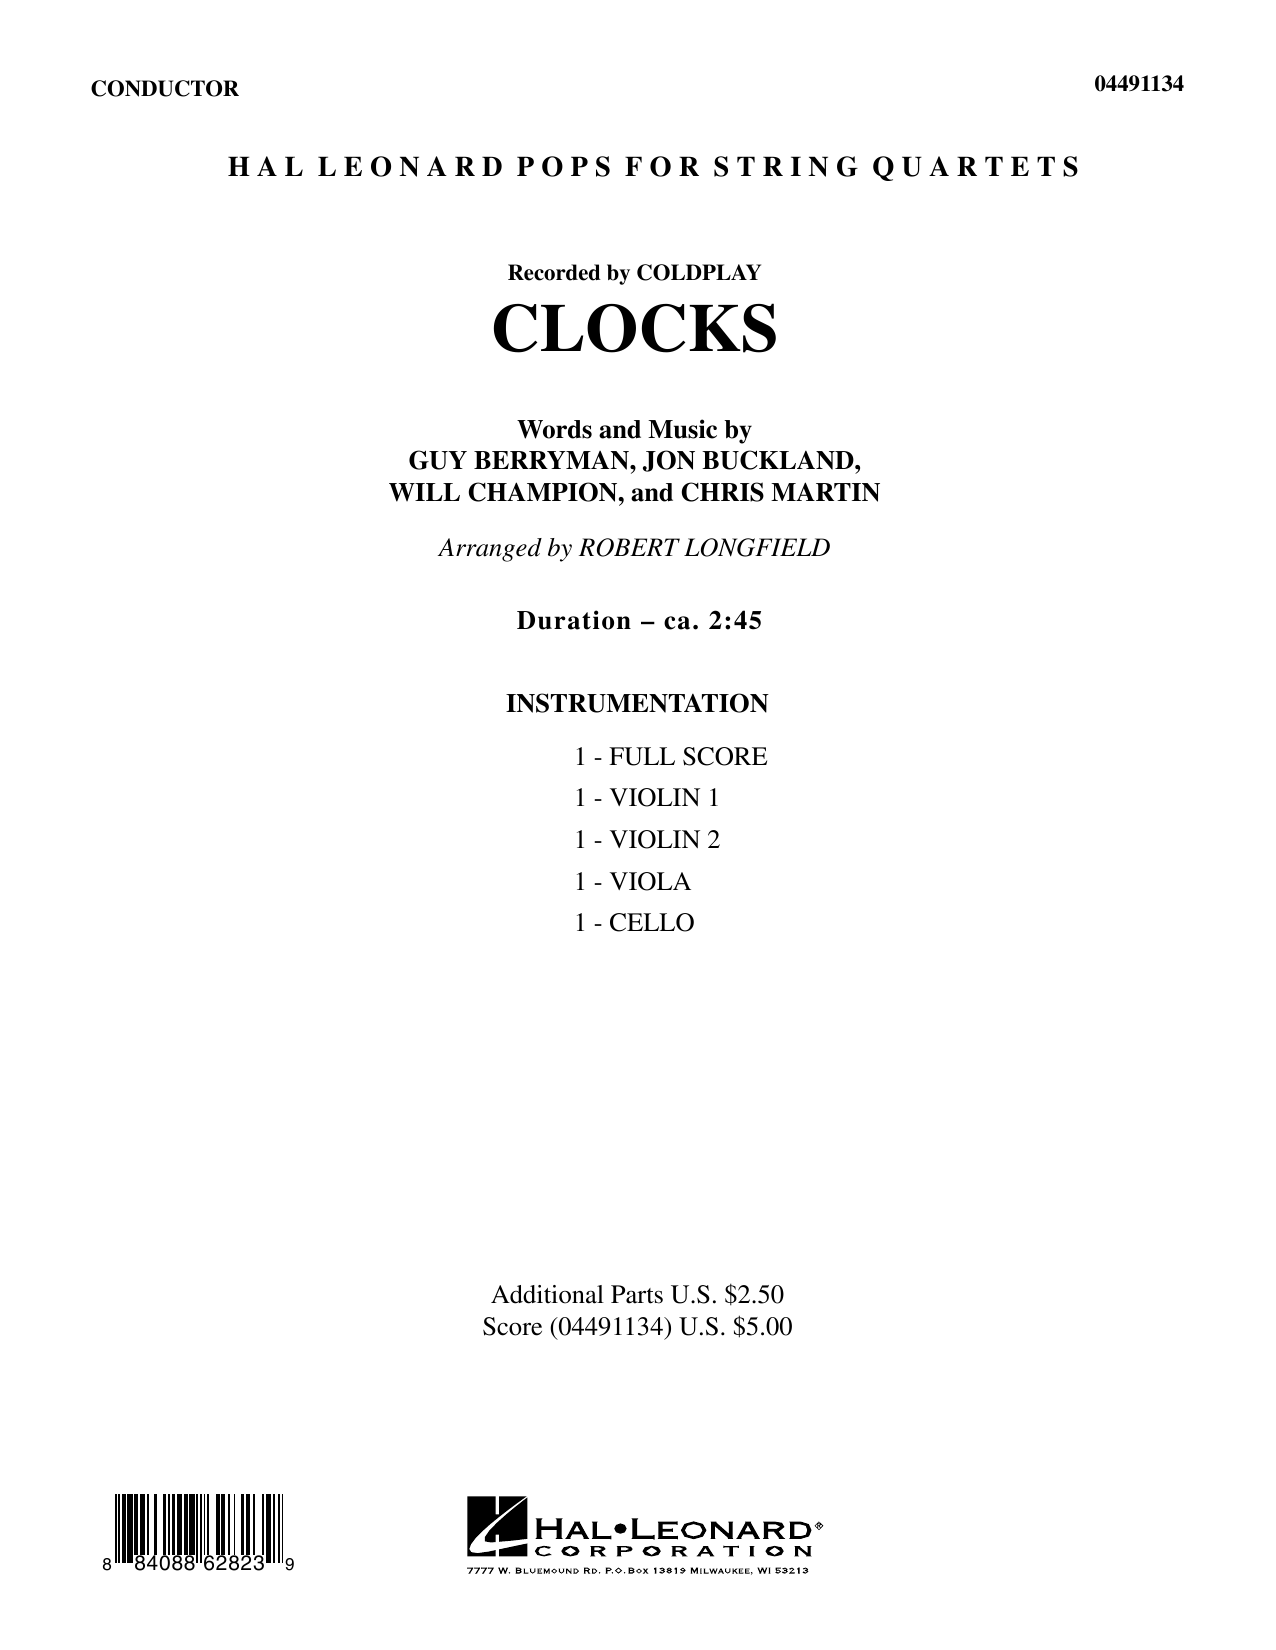 Robert Longfield Clocks - Full Score Sheet Music Notes & Chords for String Quartet - Download or Print PDF